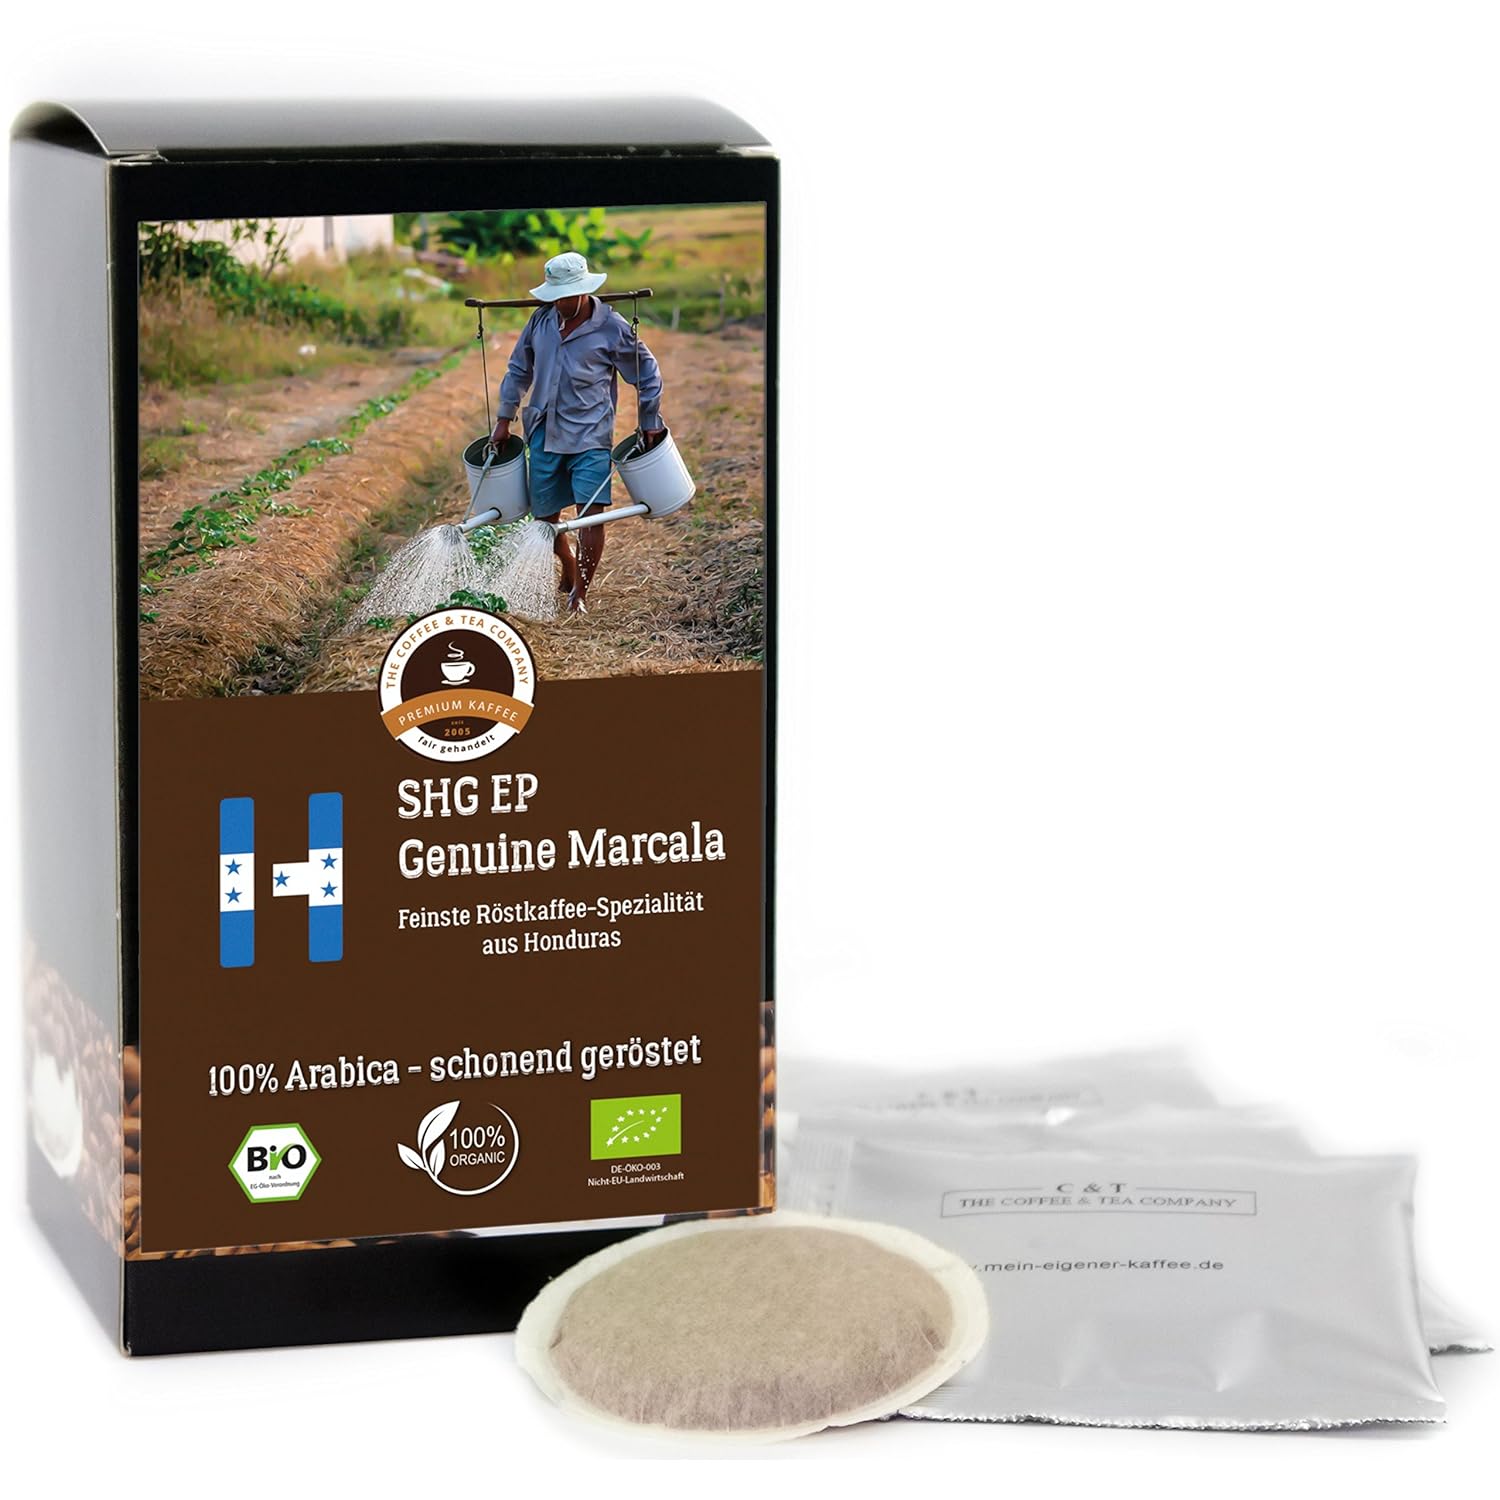 Coffee Globetrotter - Organic Honduras Genuine Marcala - 30 Premium Coffee Pods - for Senseo Coffee Machine - Top Coffee - Roasted Coffee from Organic Cultivation